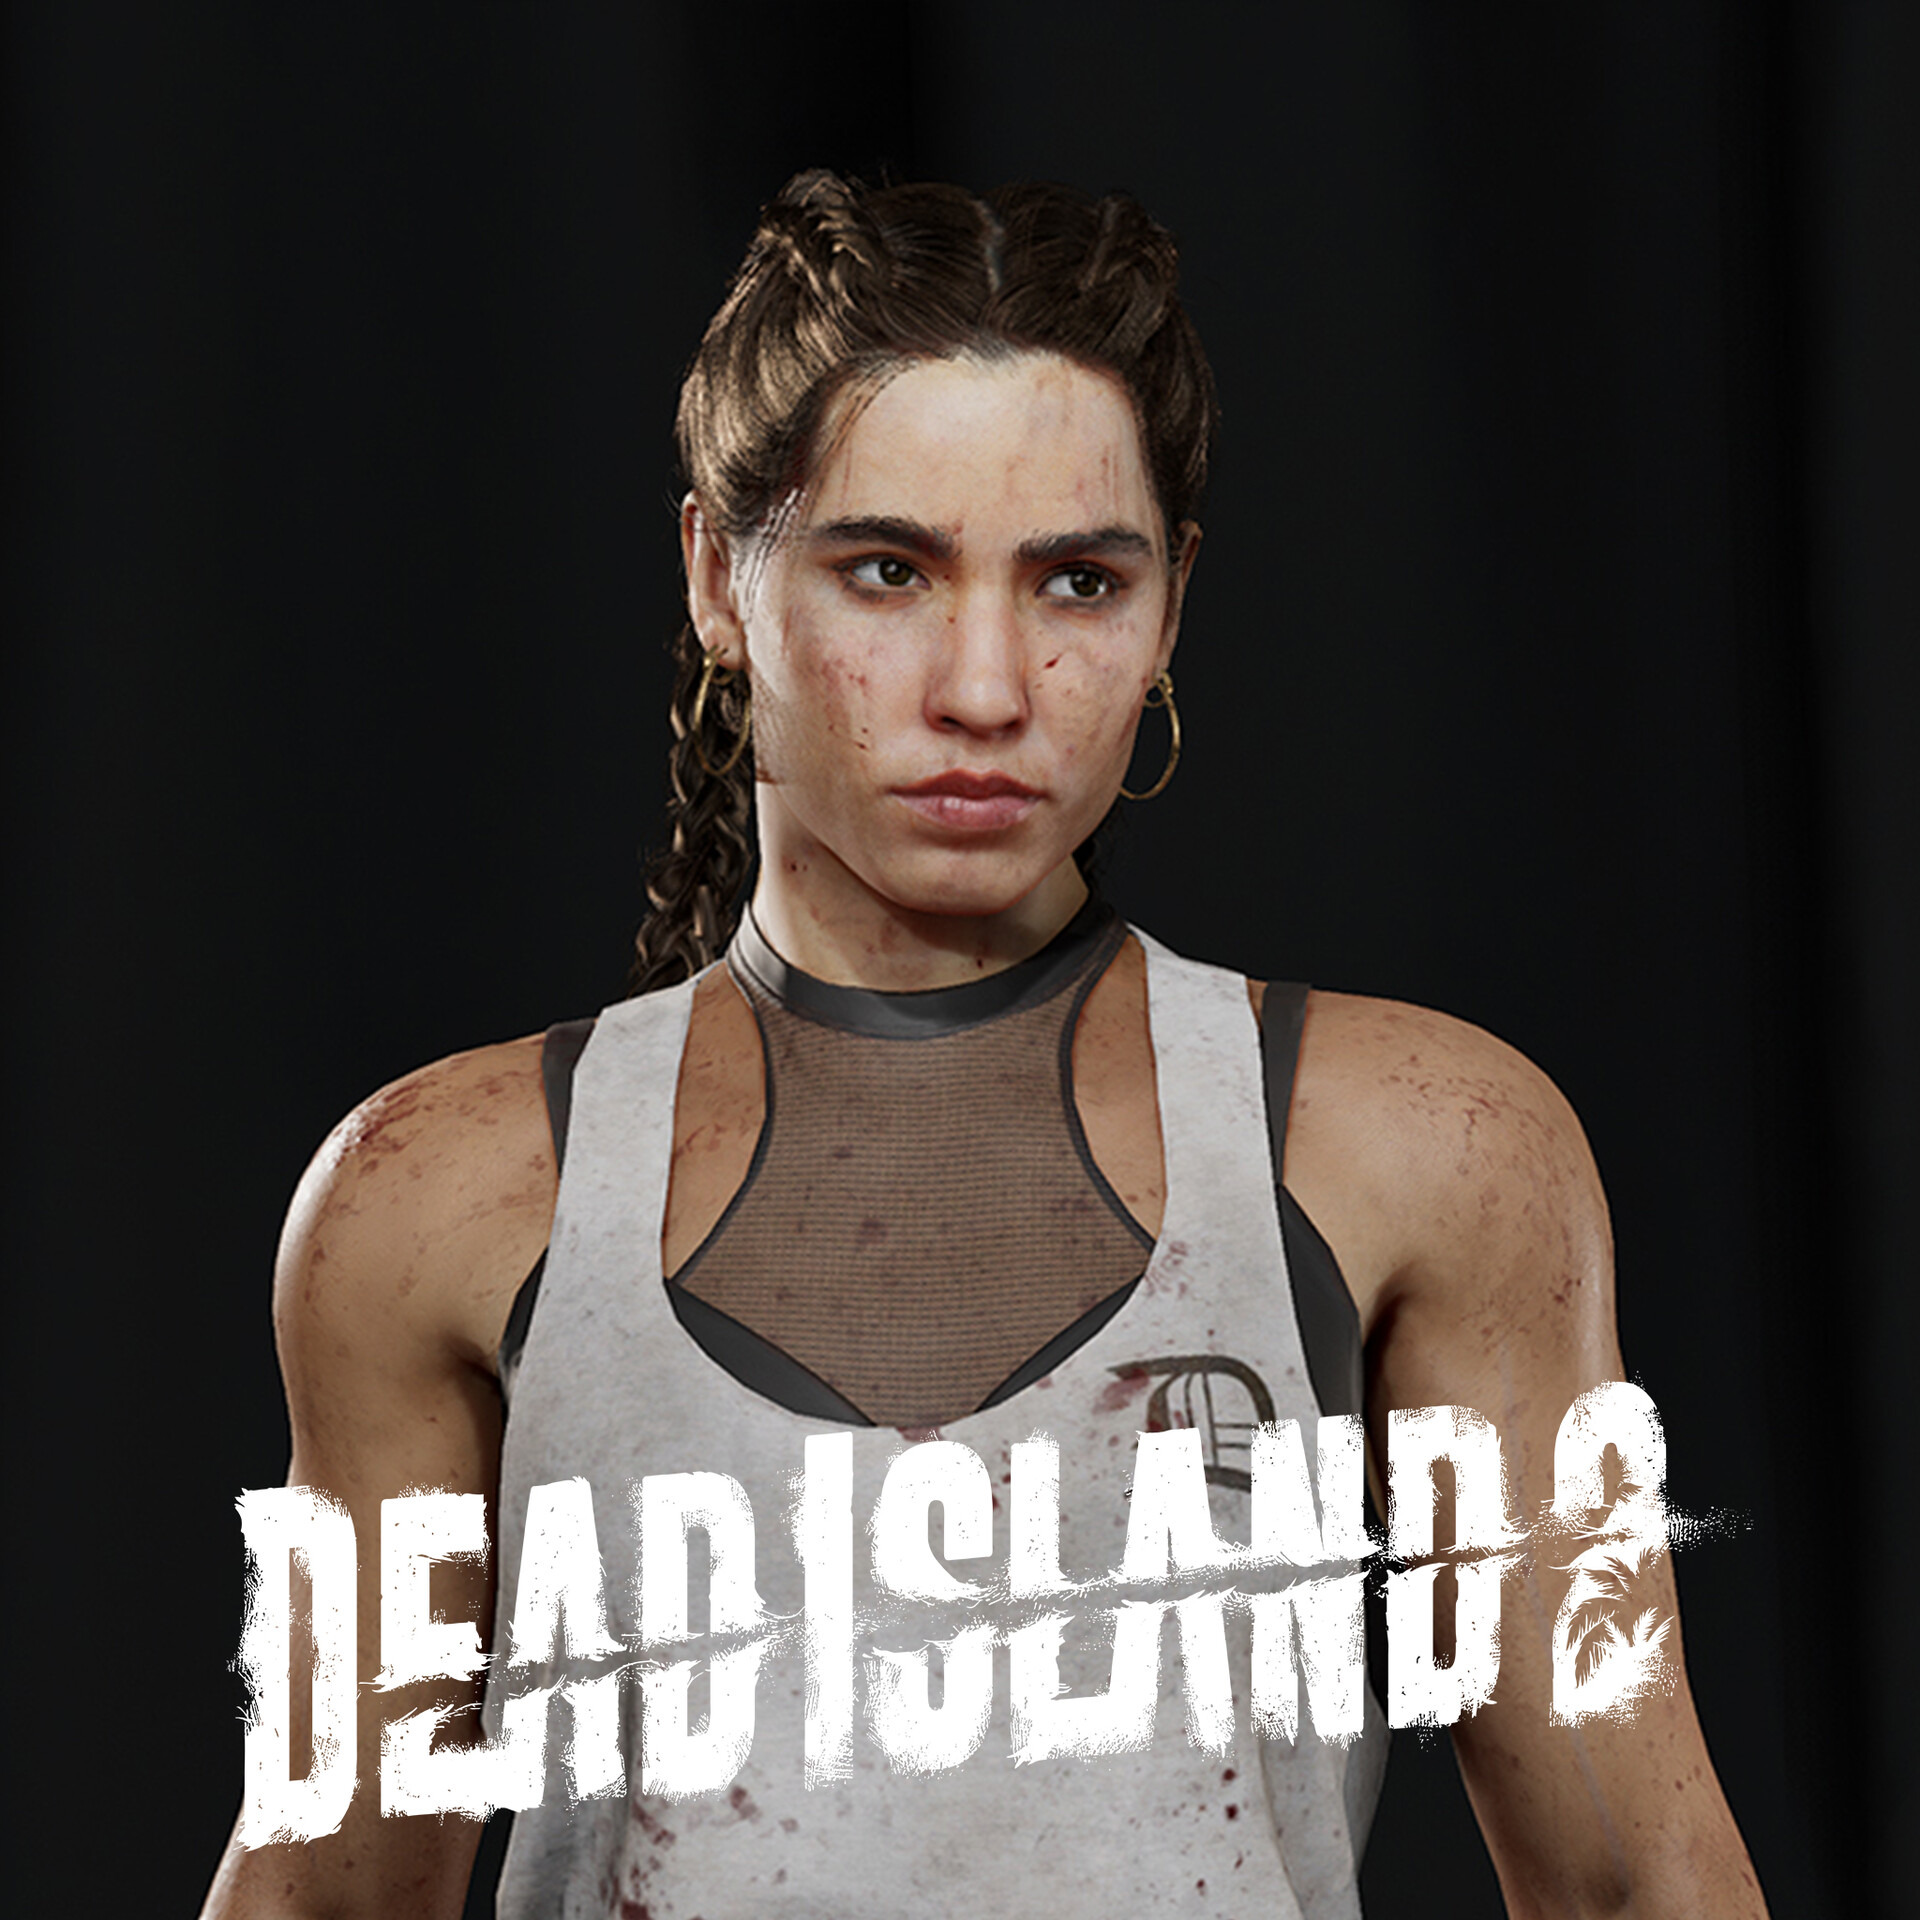 Steam Workshop::Carla - Dead Island 2